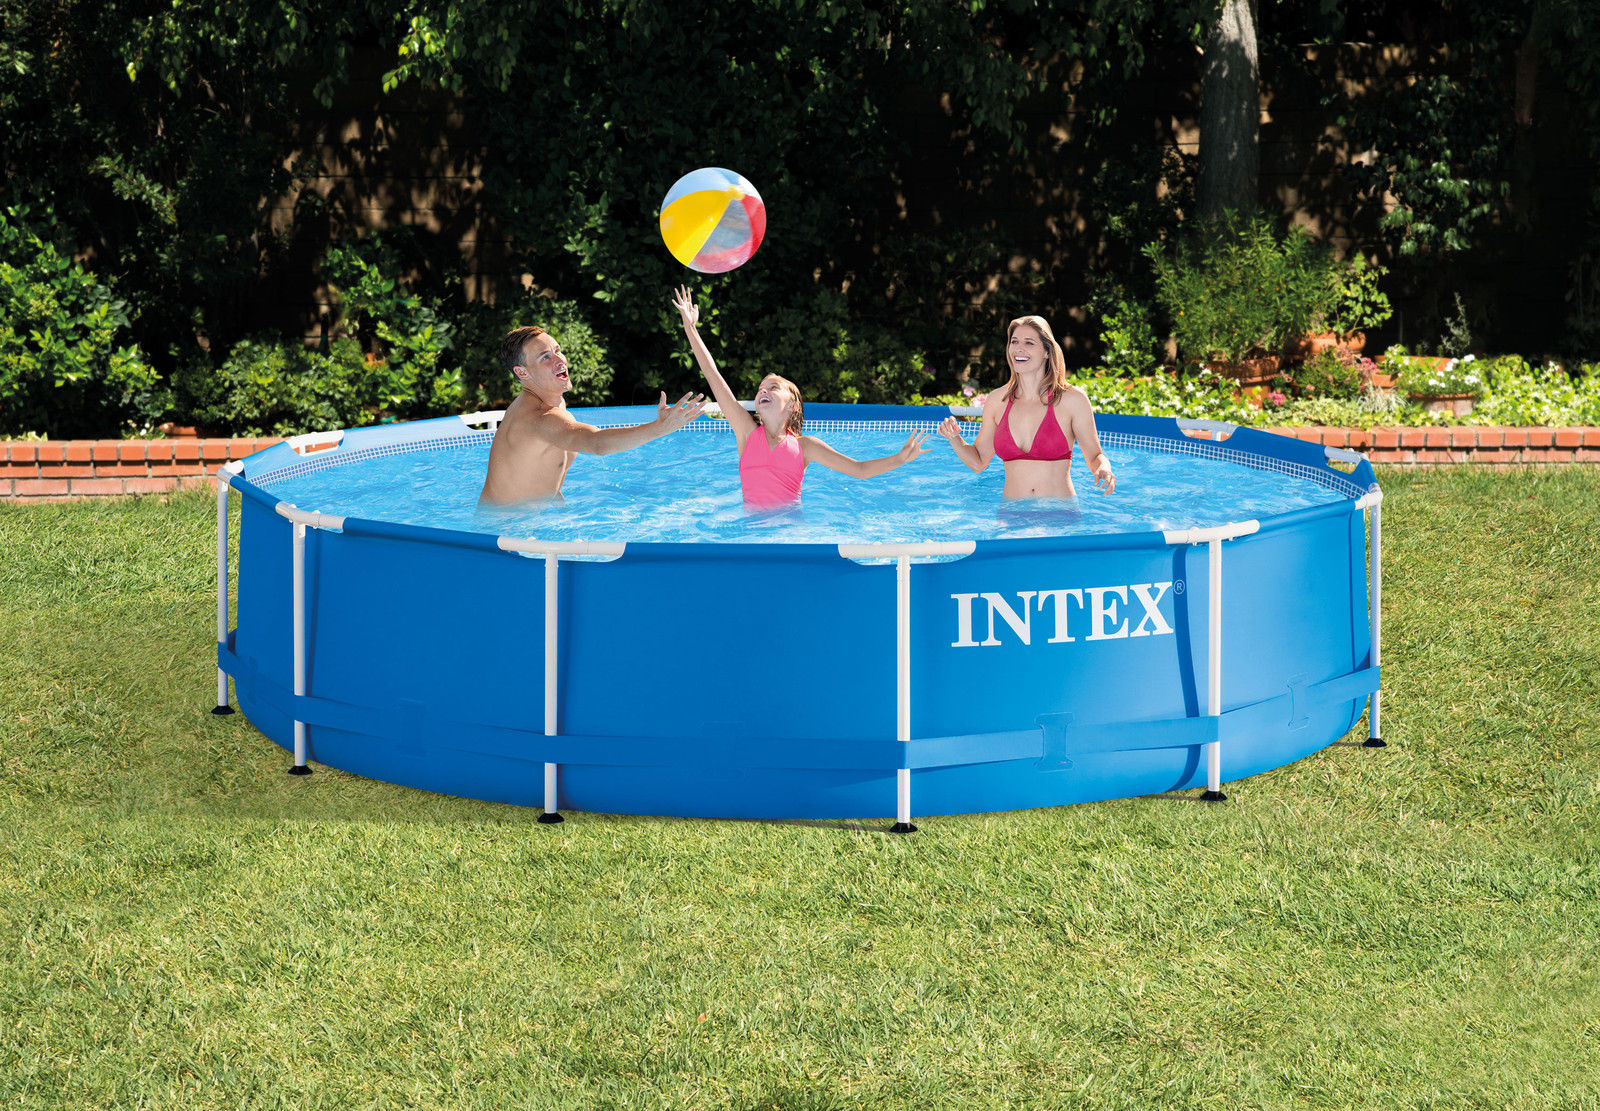 Intex 12ft X 30in Metal Frame Pool Set Only $99.99!